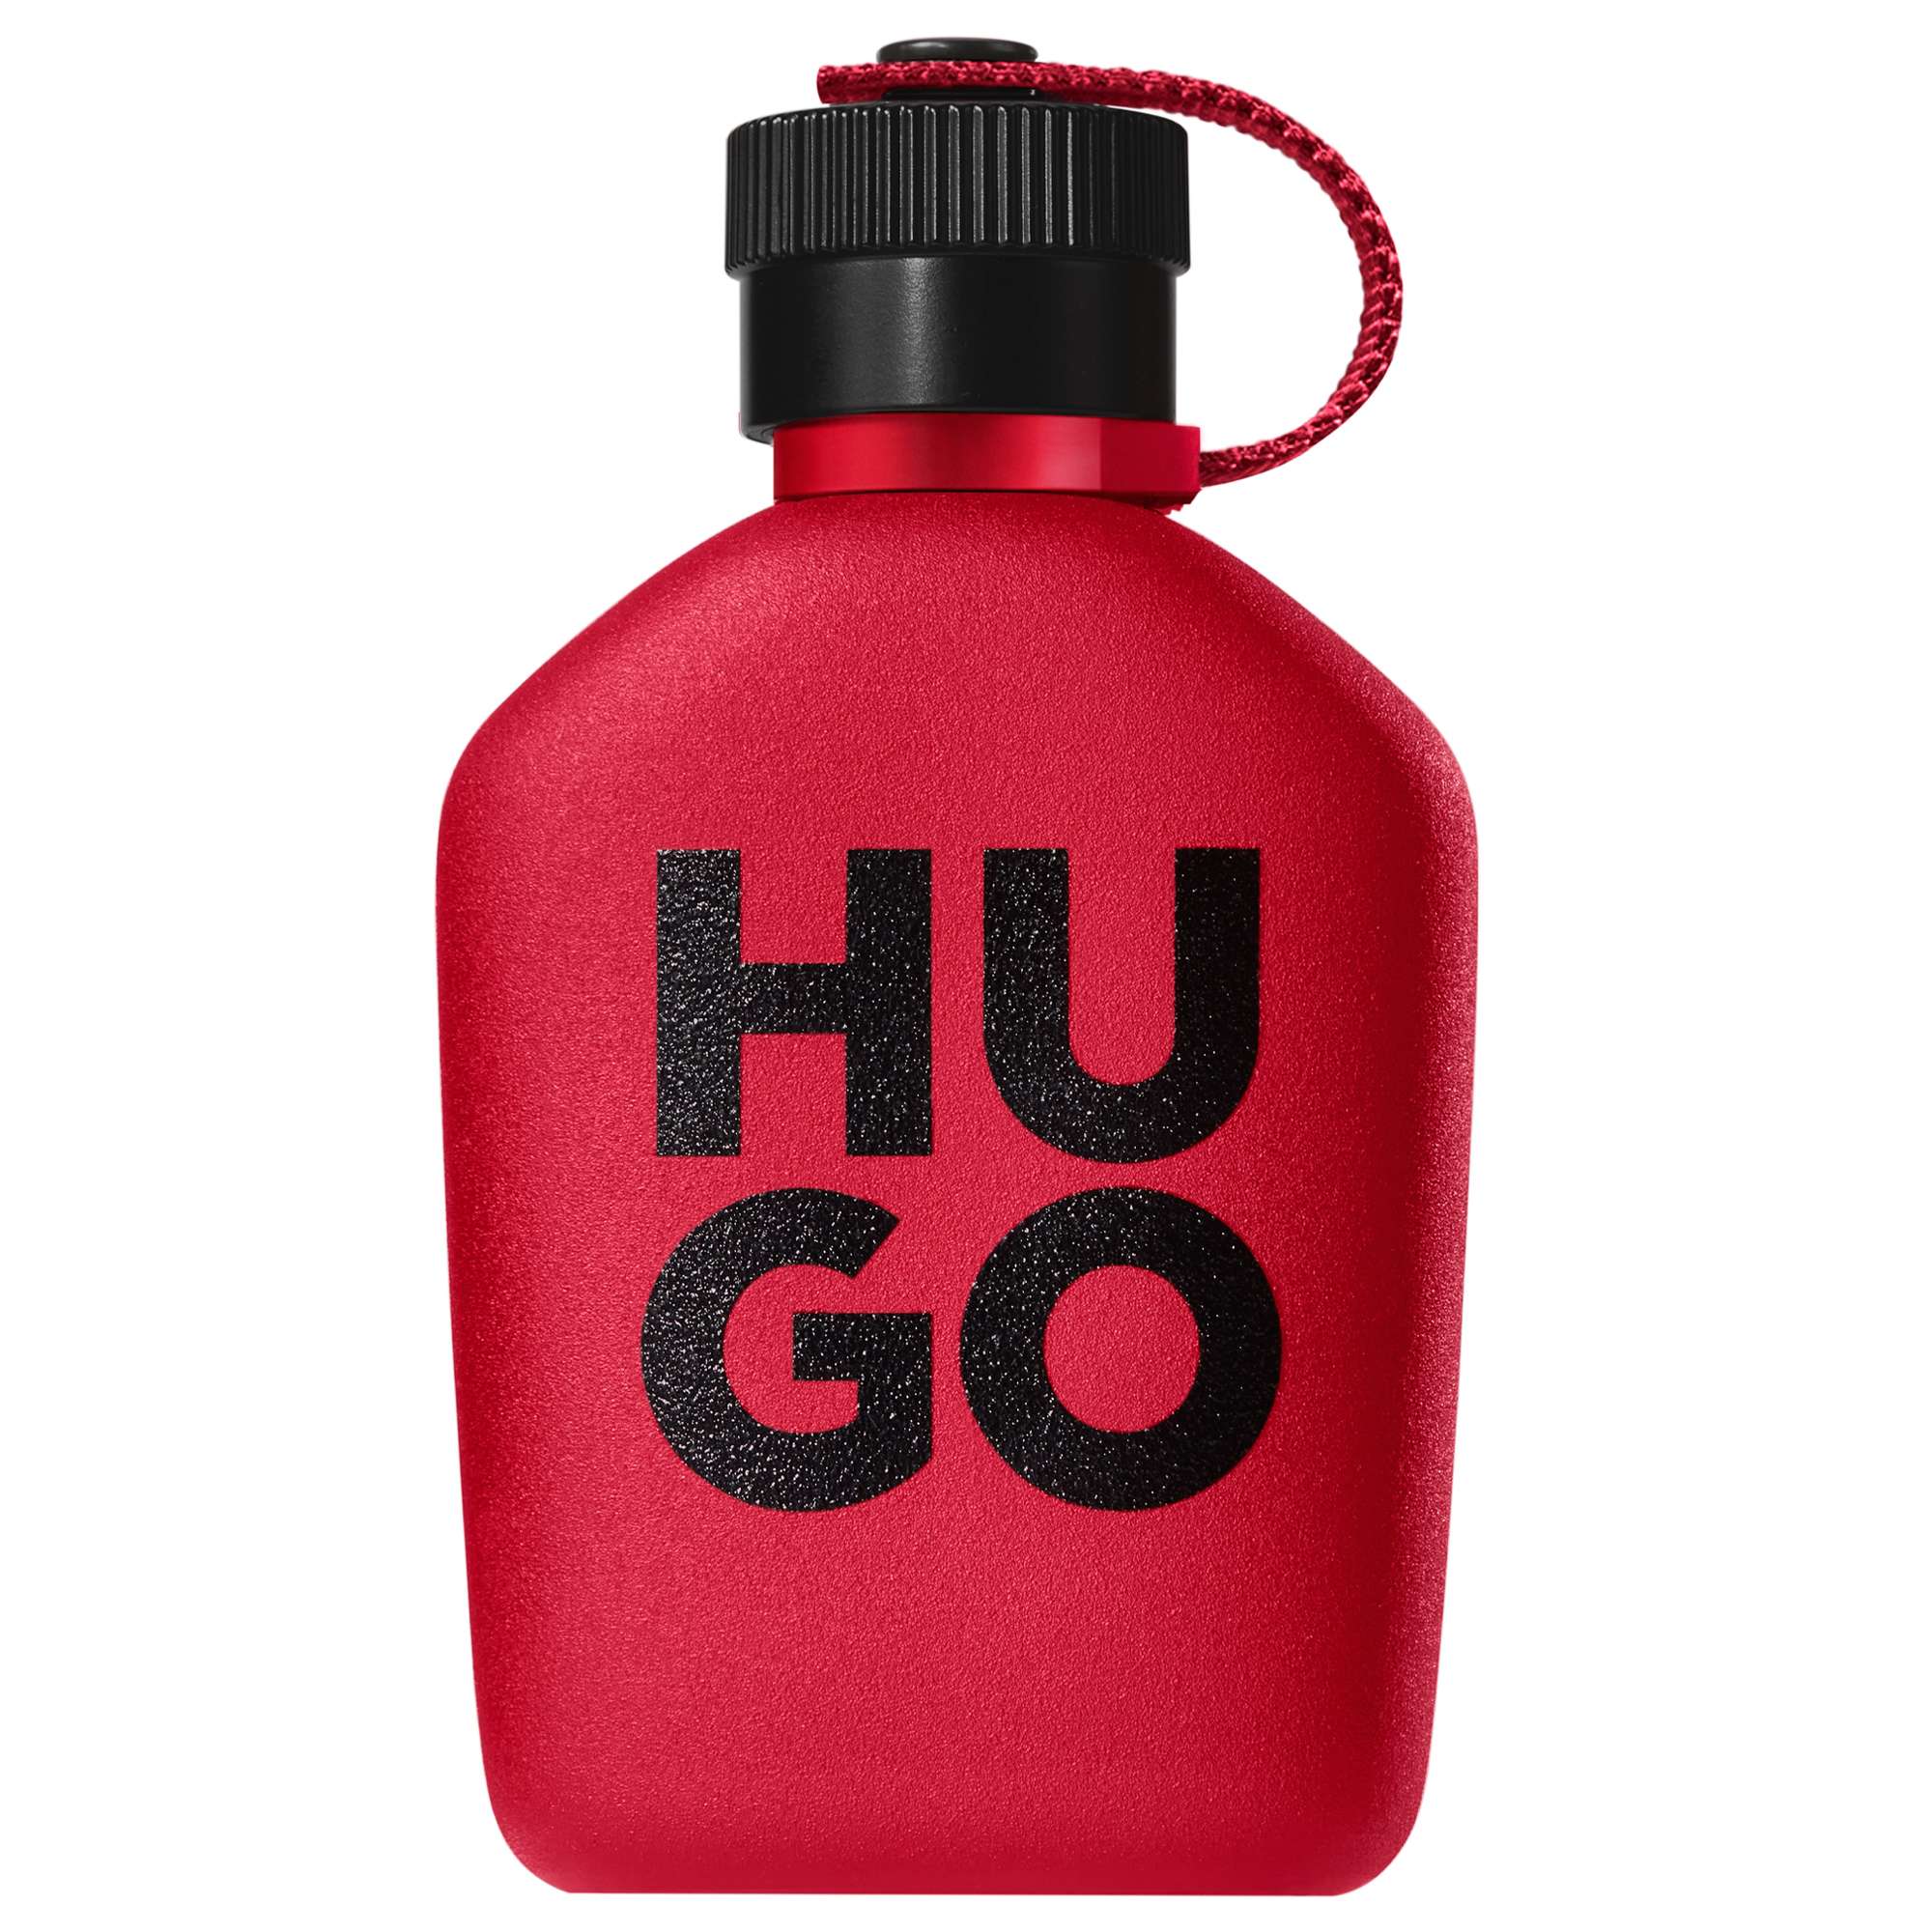 HUGO BOSS HUGO Intense Eau de Parfum for Men 125ml